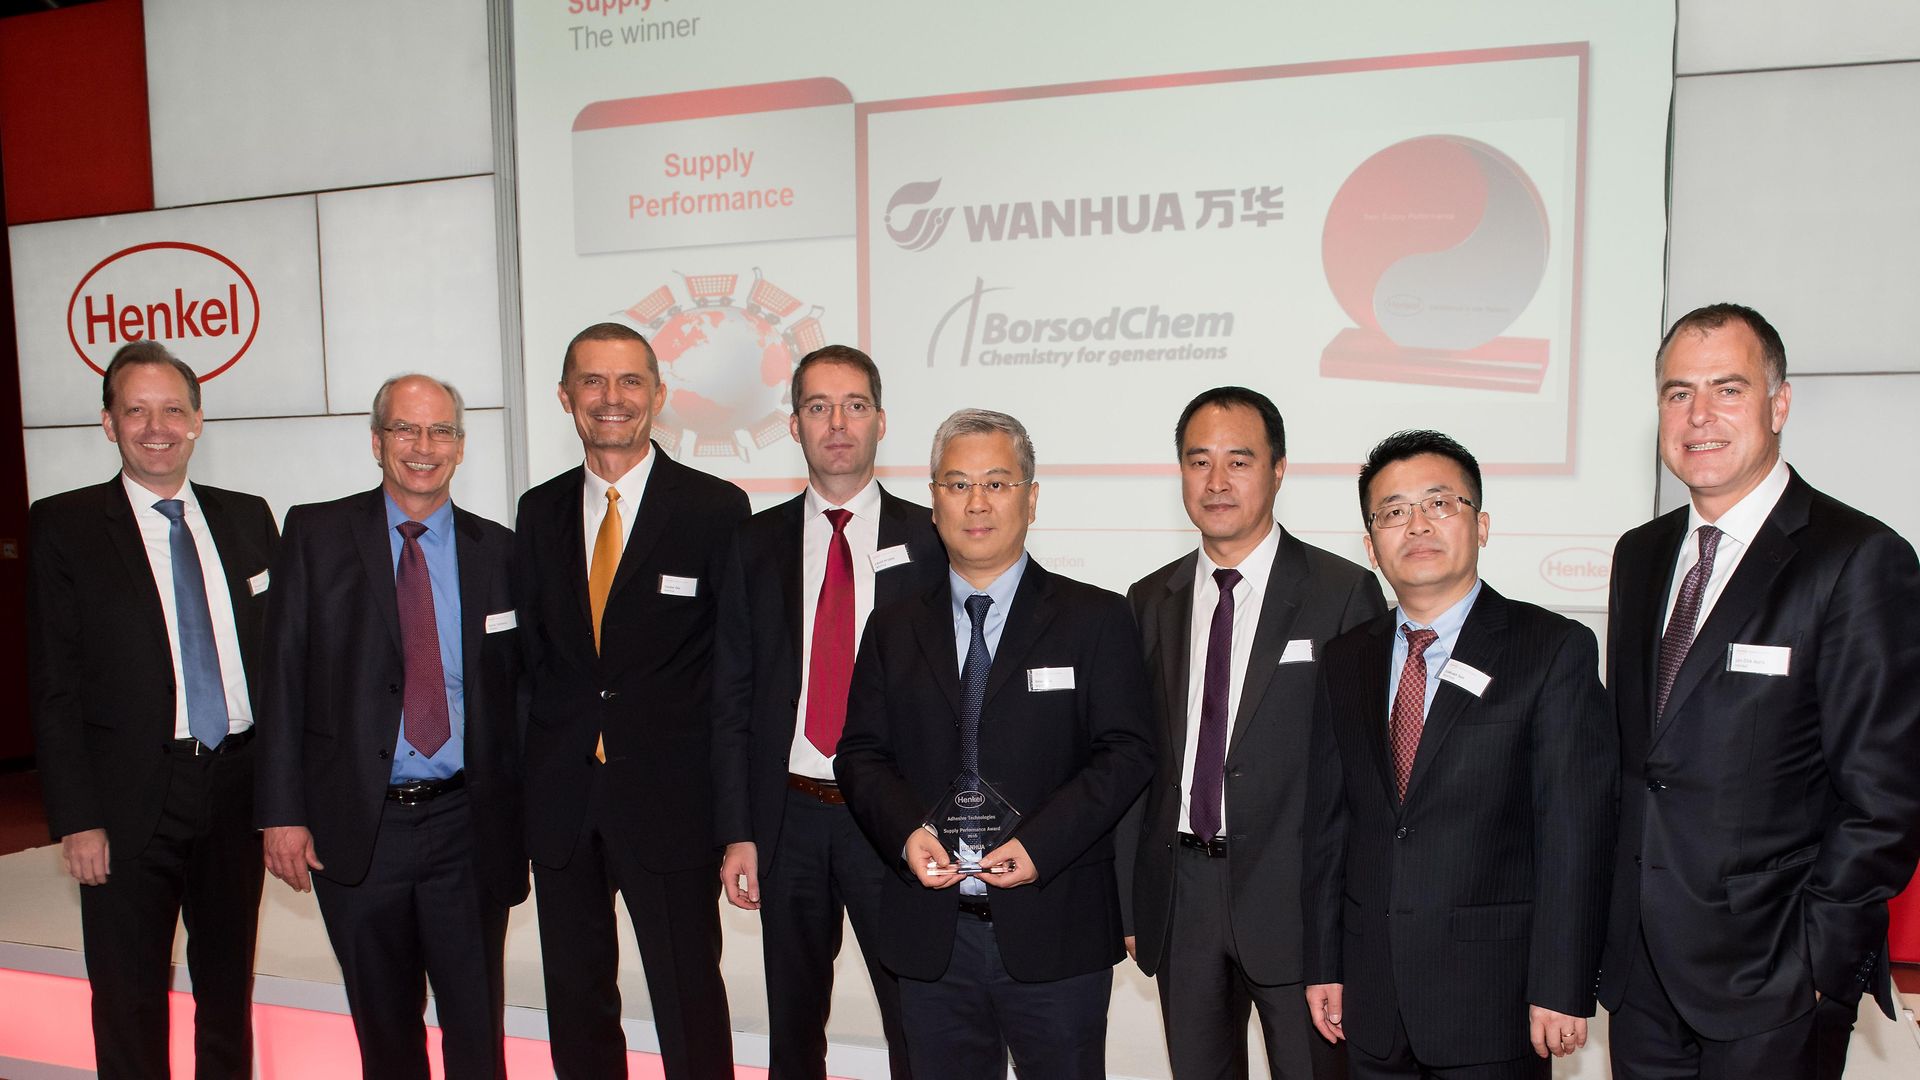 Supply Performance Award: Wanhua